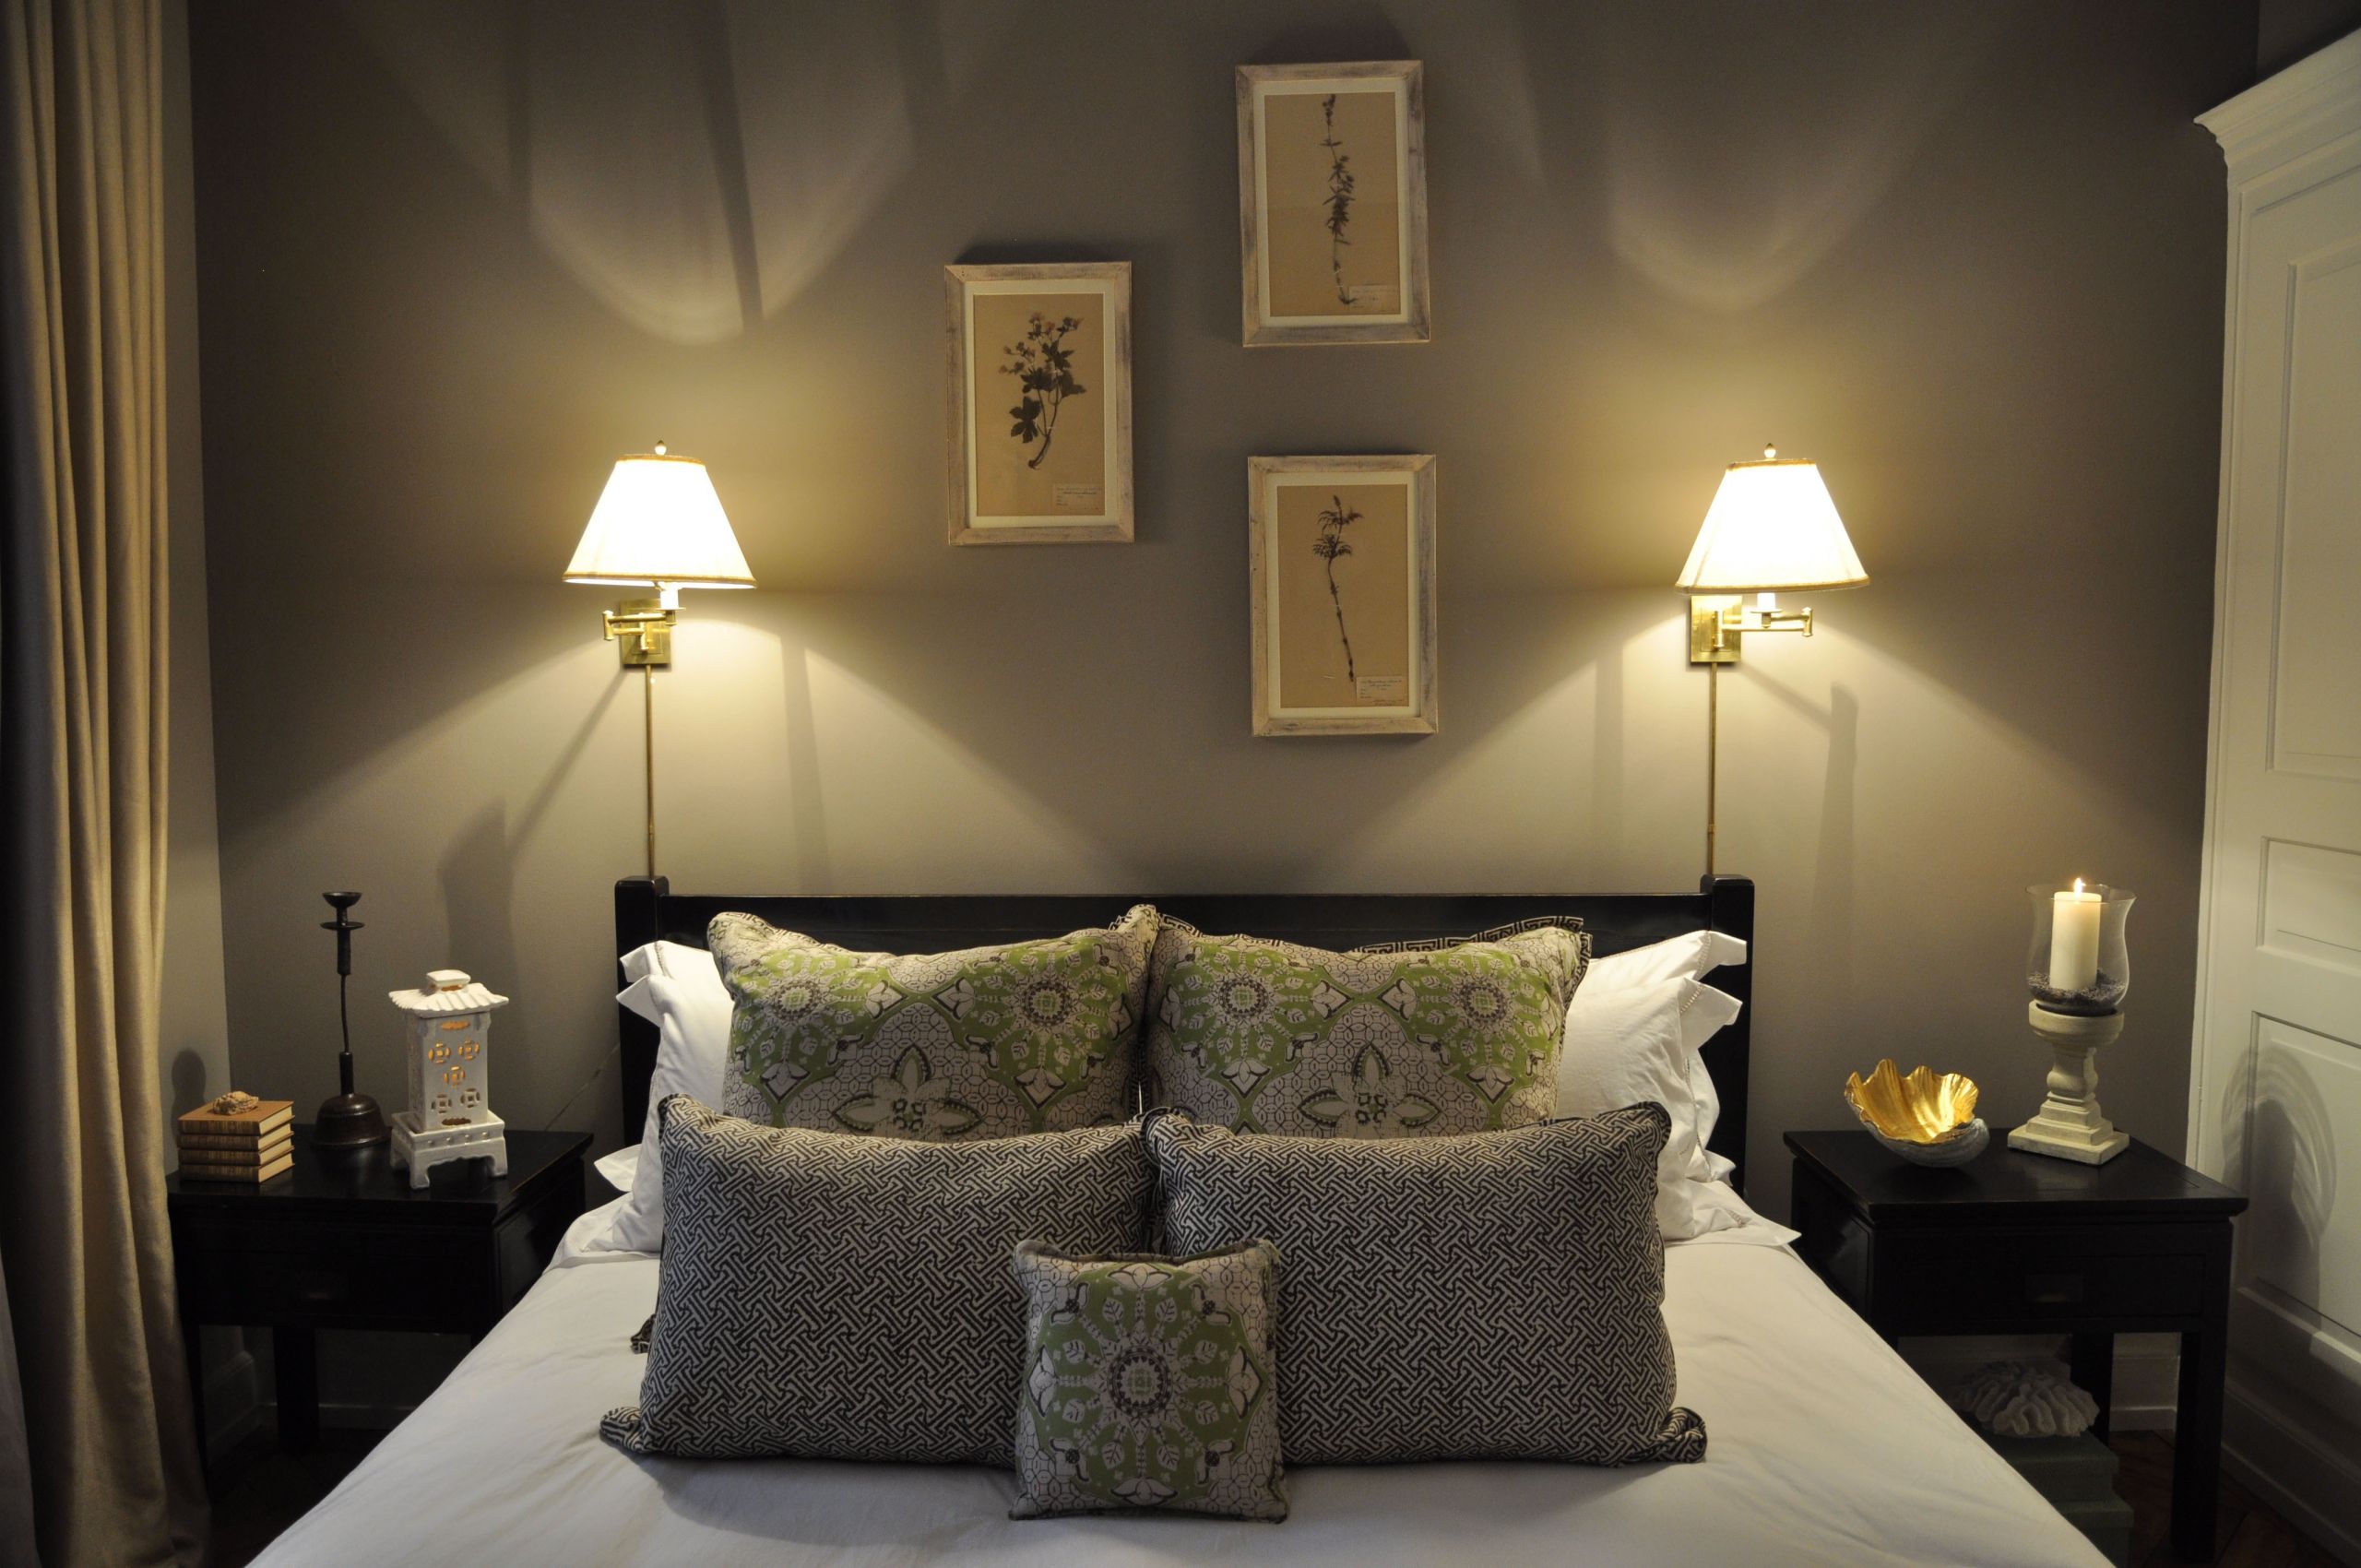 Bedroom Wall Lamp
 Popular Plug In Wall Lamps For Bedroom Ideas Bedroom